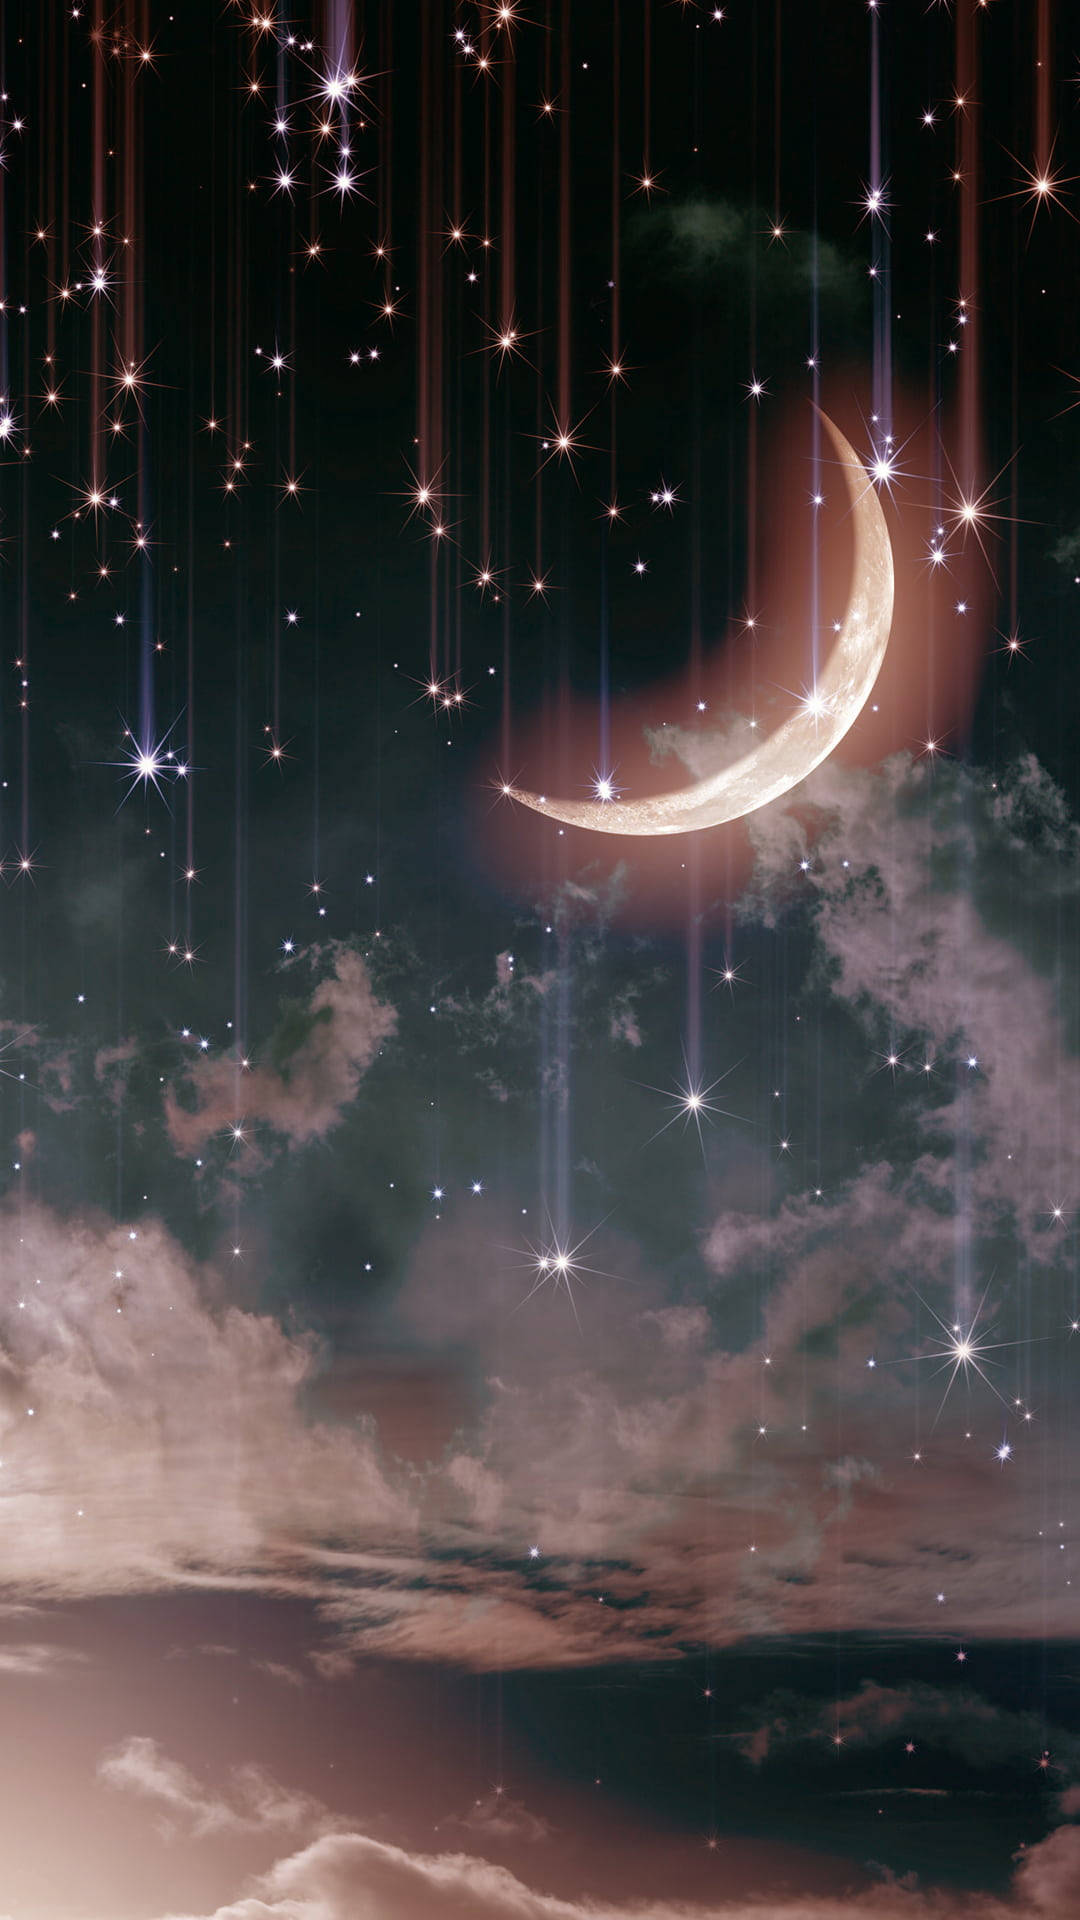 Moon in Dark Night Sky · Free Stock Photo